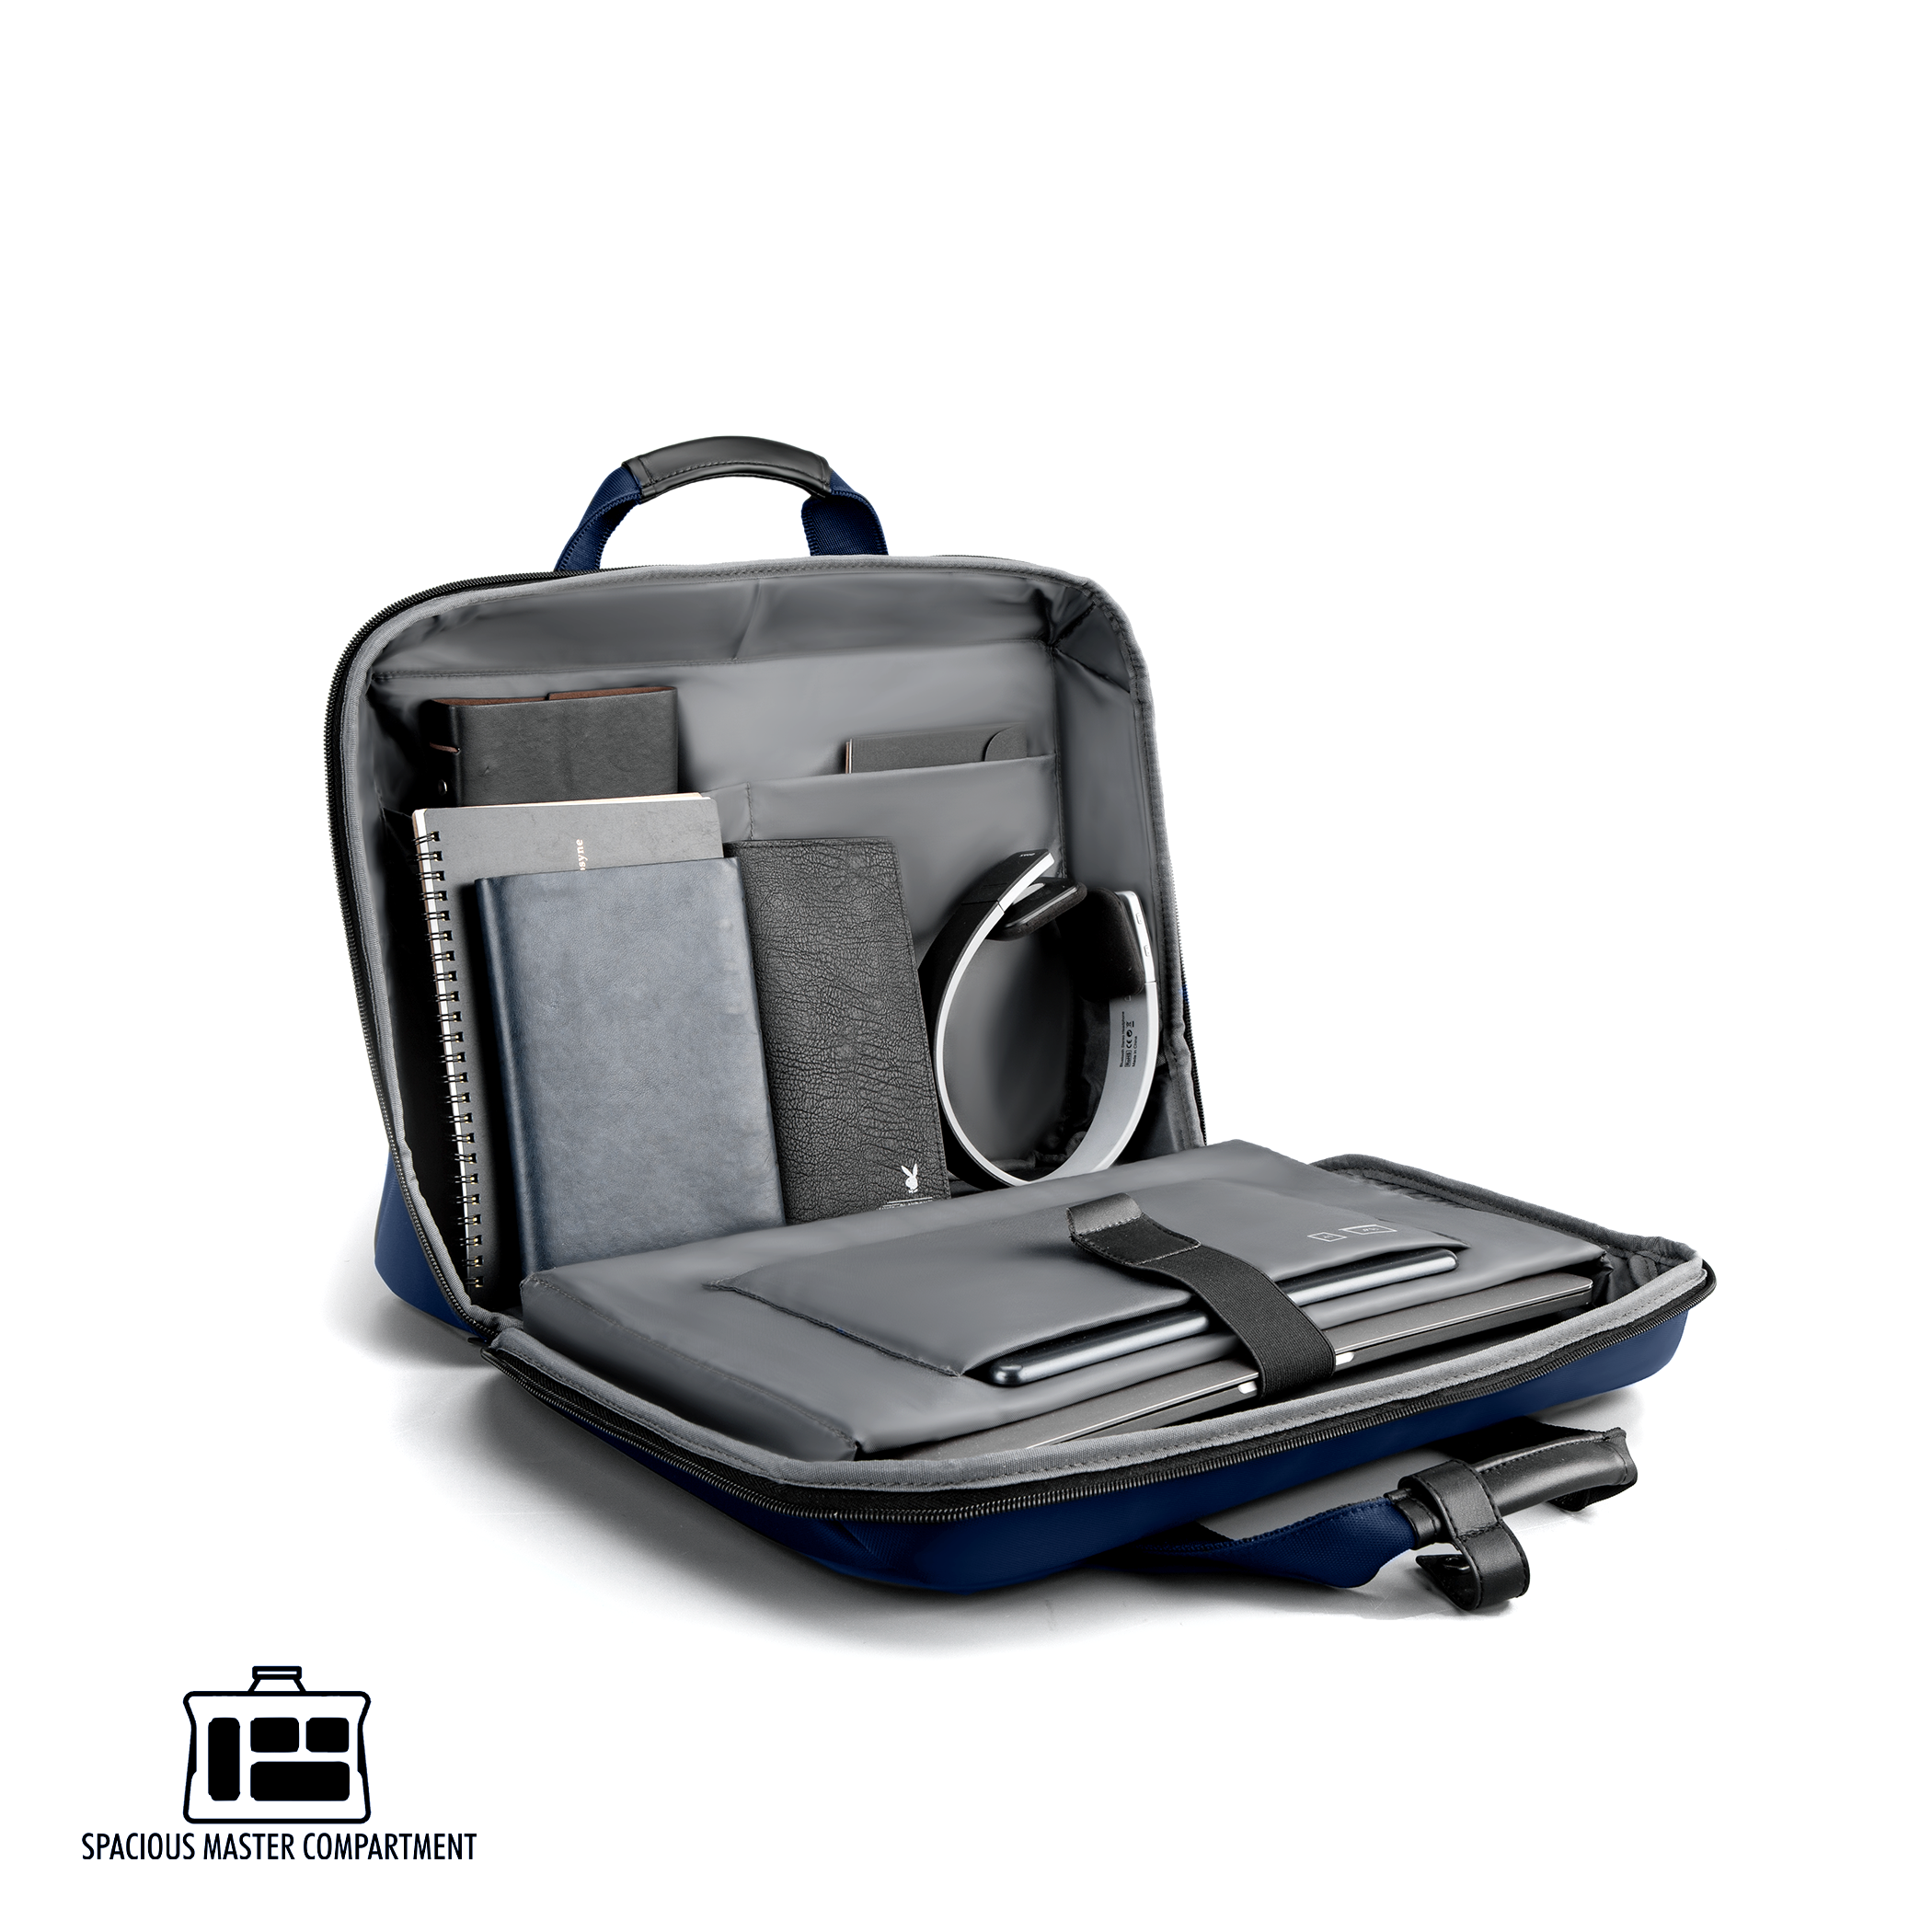 ZenPack LITE (Shibuya Blue) Laptop Messenger Bag X Briefcase with USB Fast-Charging